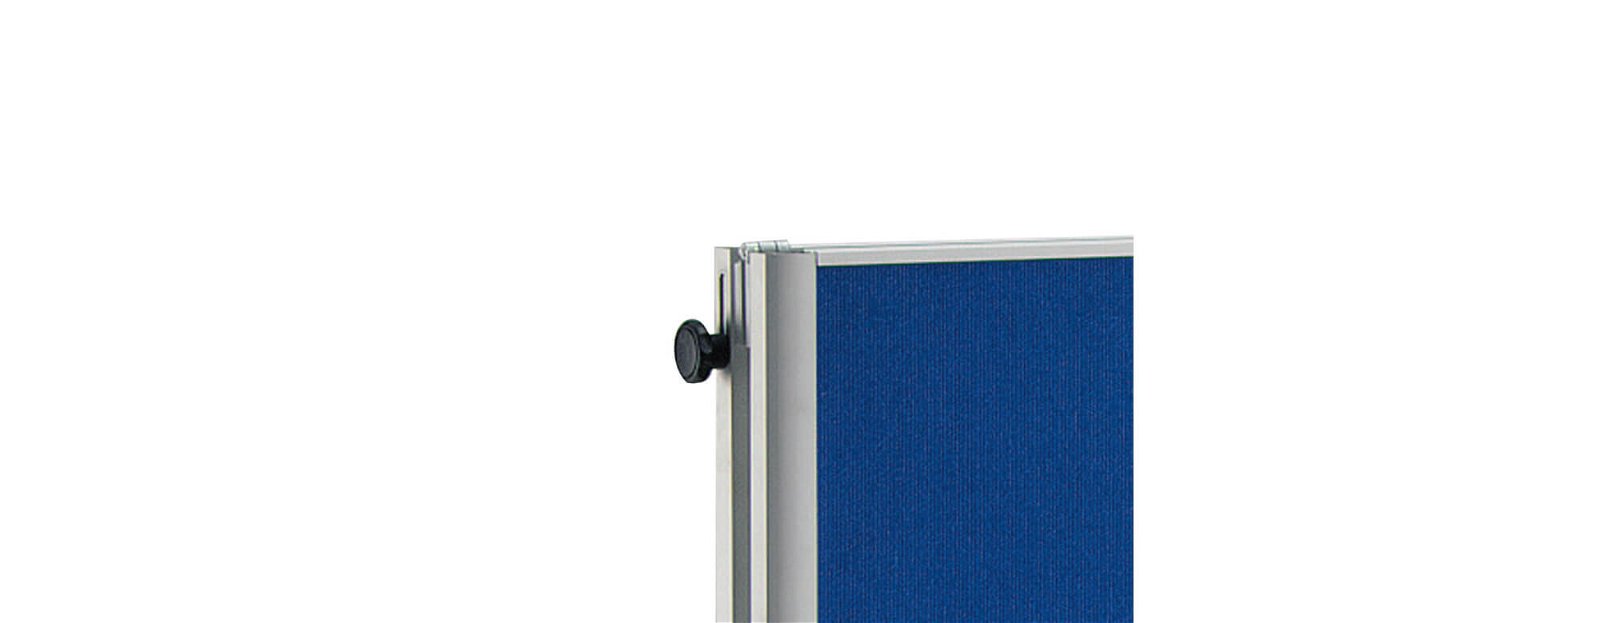 Moderationstafel MAULpro klappb. Textil blau, 150x120cm, grau